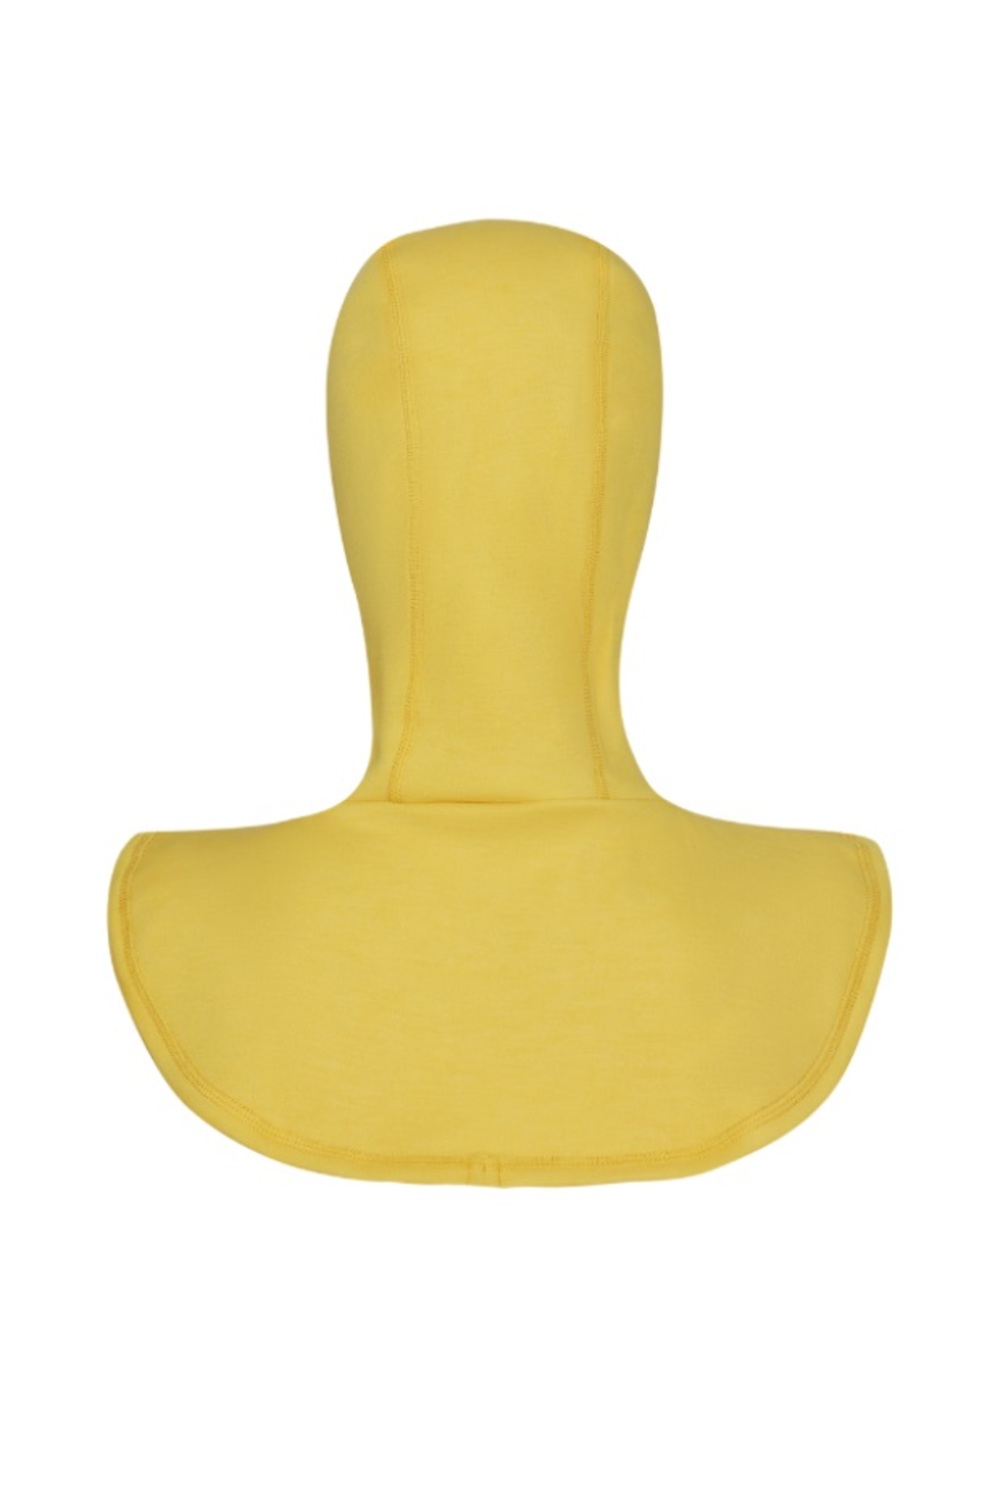 Flammschutzhaube PROTECT gelb ohne Schulternaht - 2-lagig